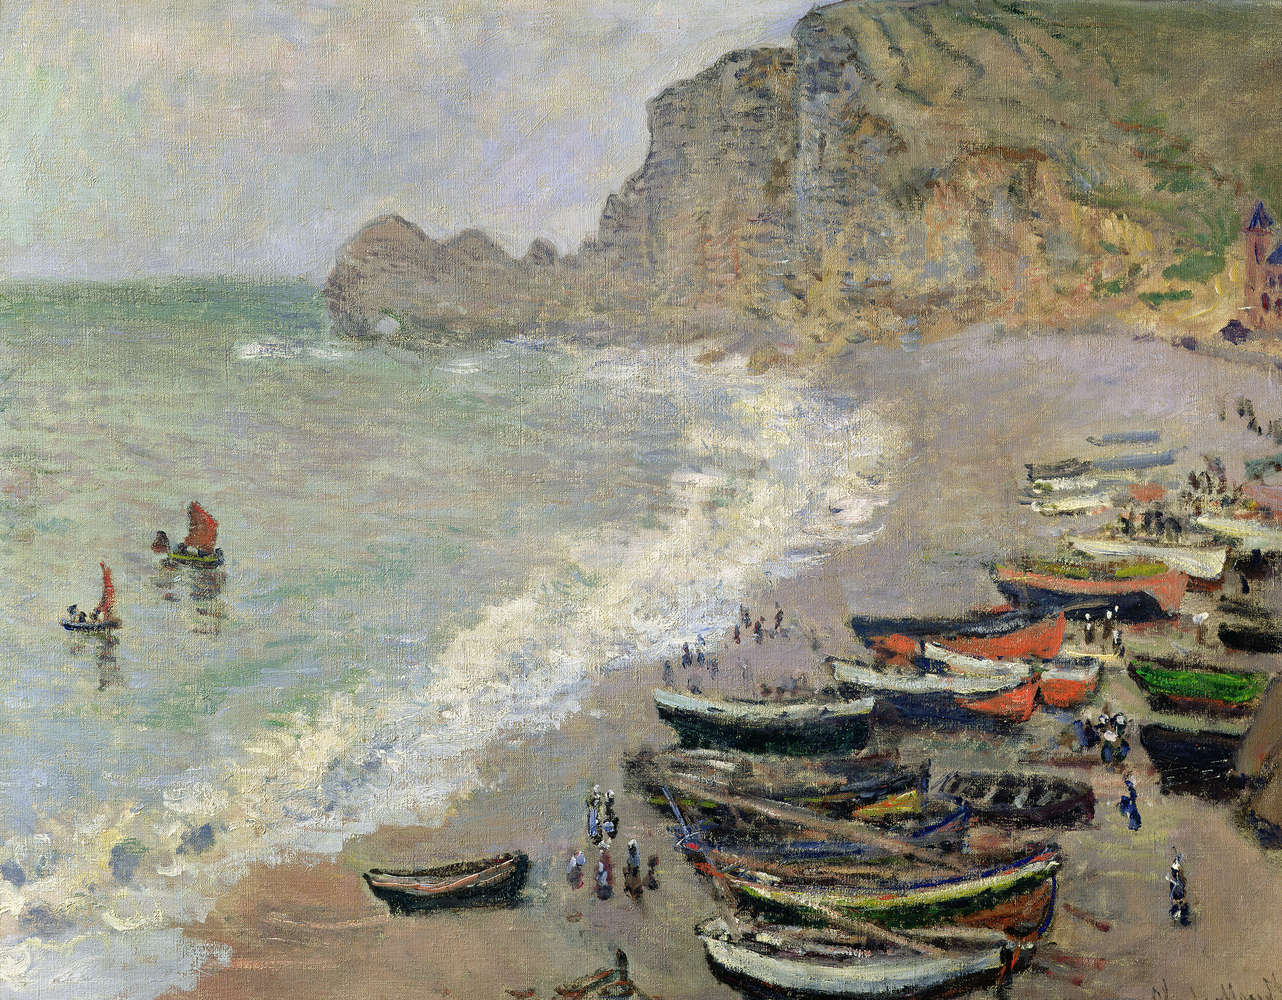             Fotomurali "Etretat, la spiaggia e la Porte d'Amont" di Claude Monet
        